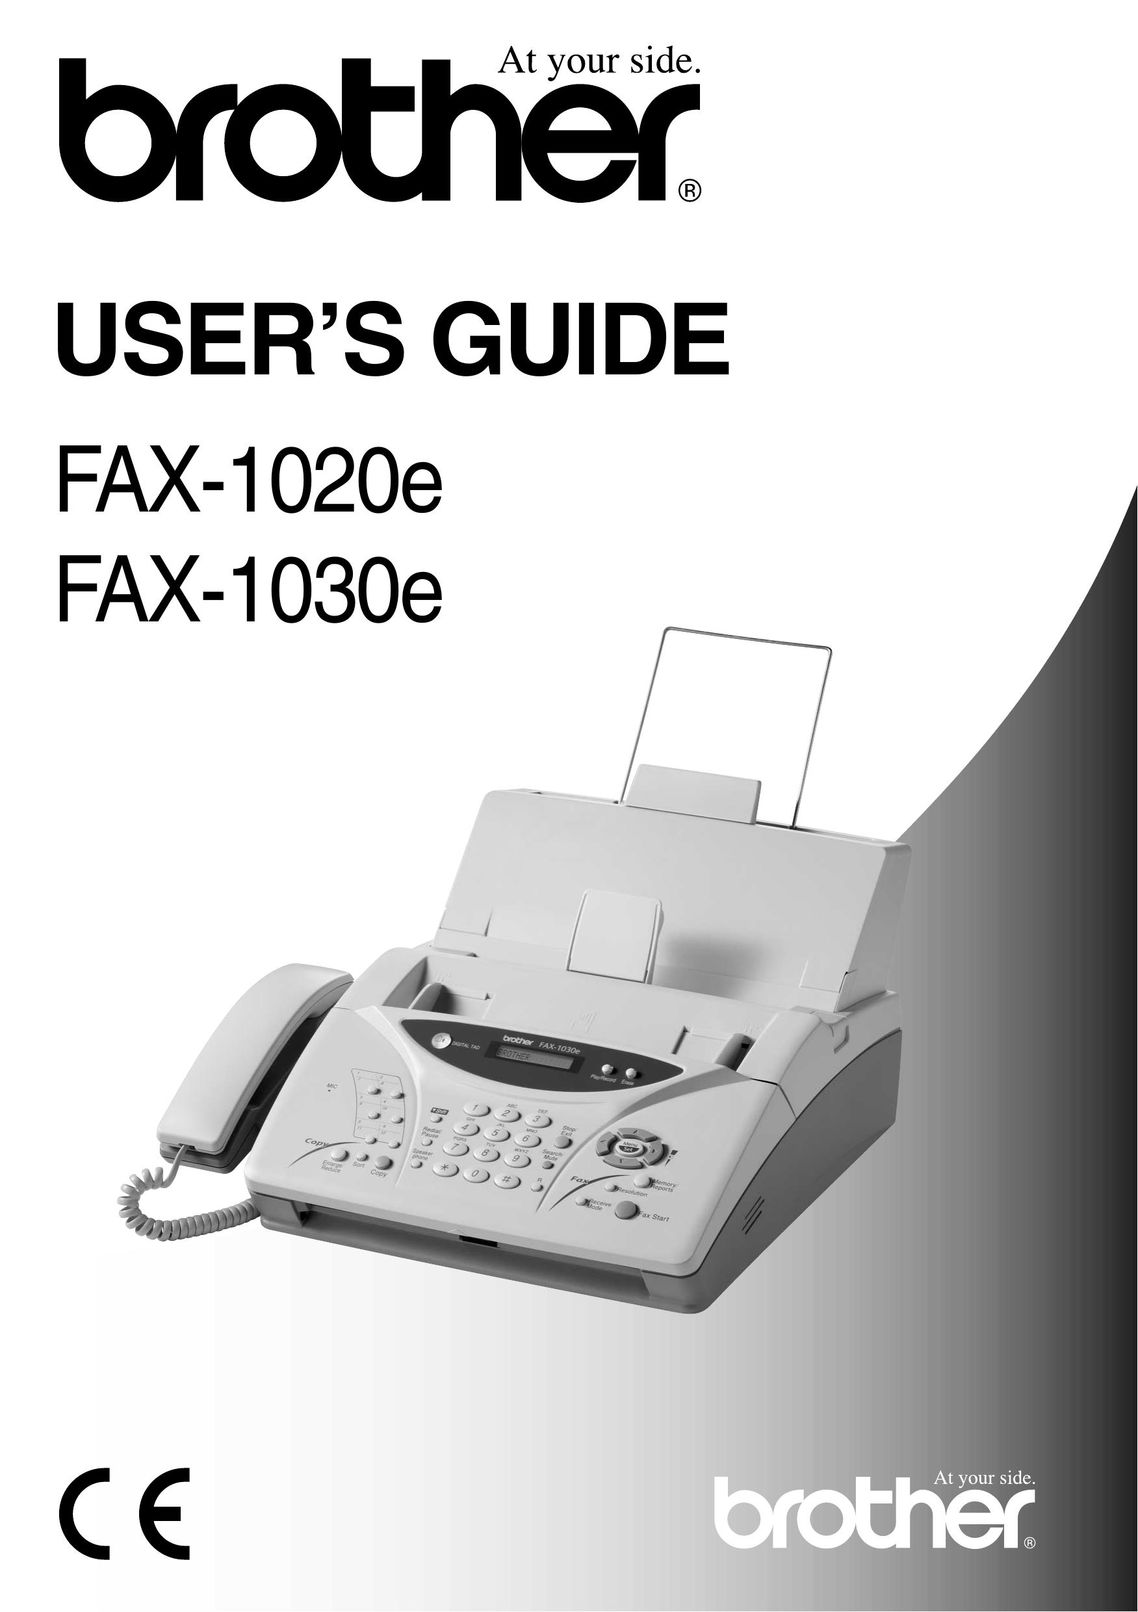 Brother 1030e Fax Machine User Manual